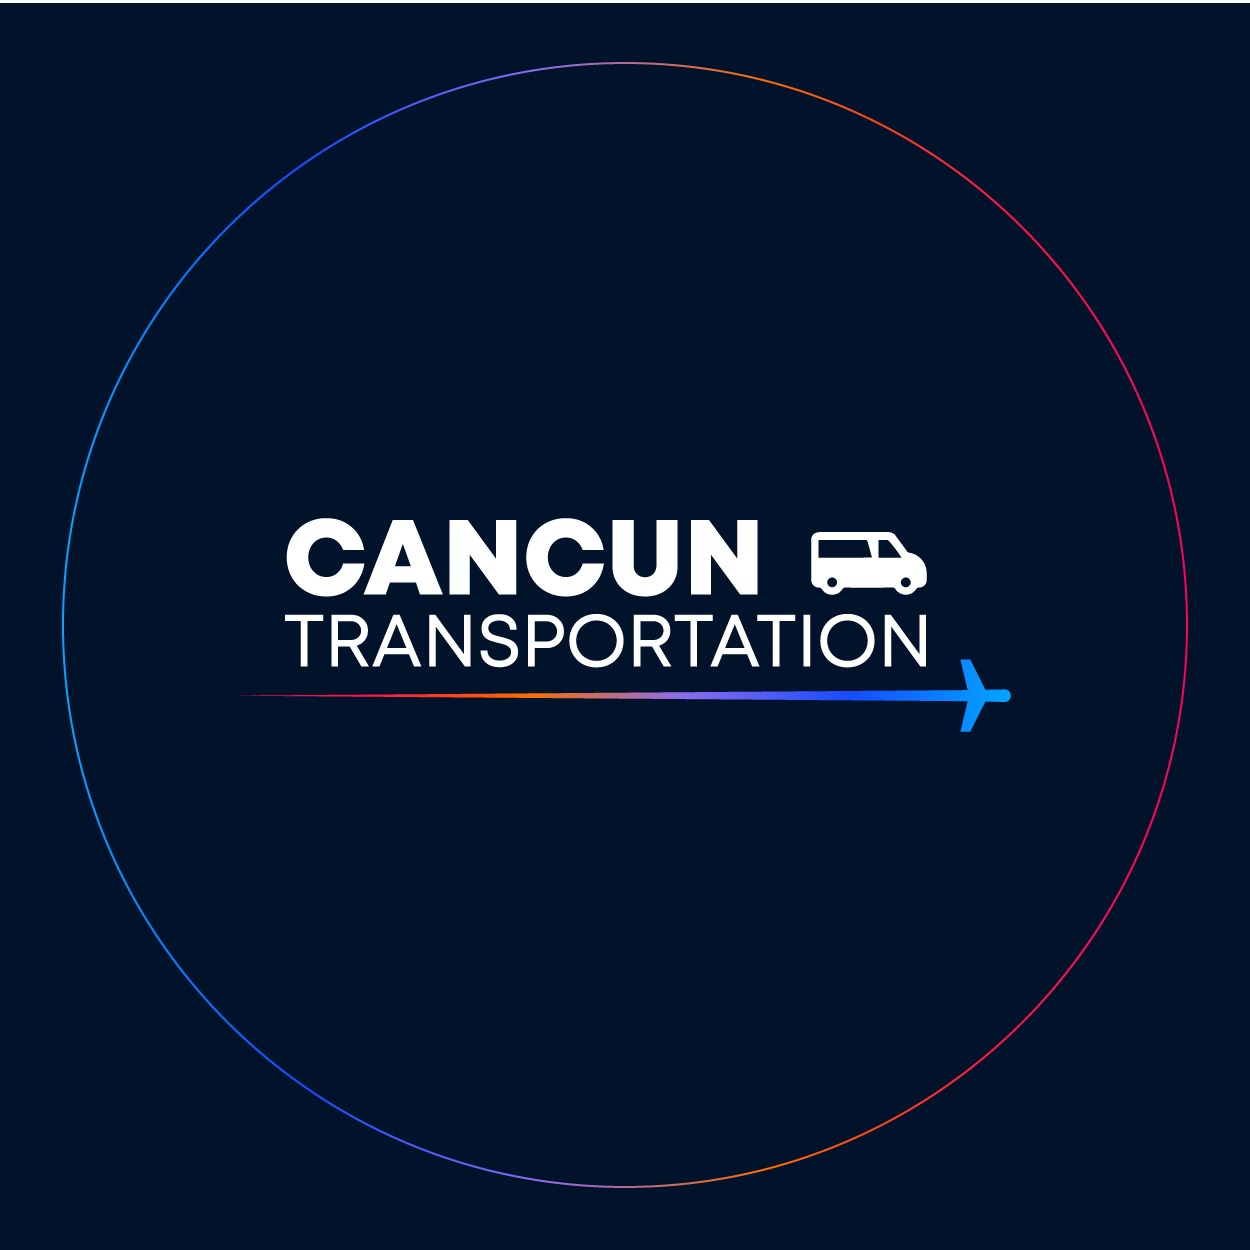 Logo of Cancun Transportation